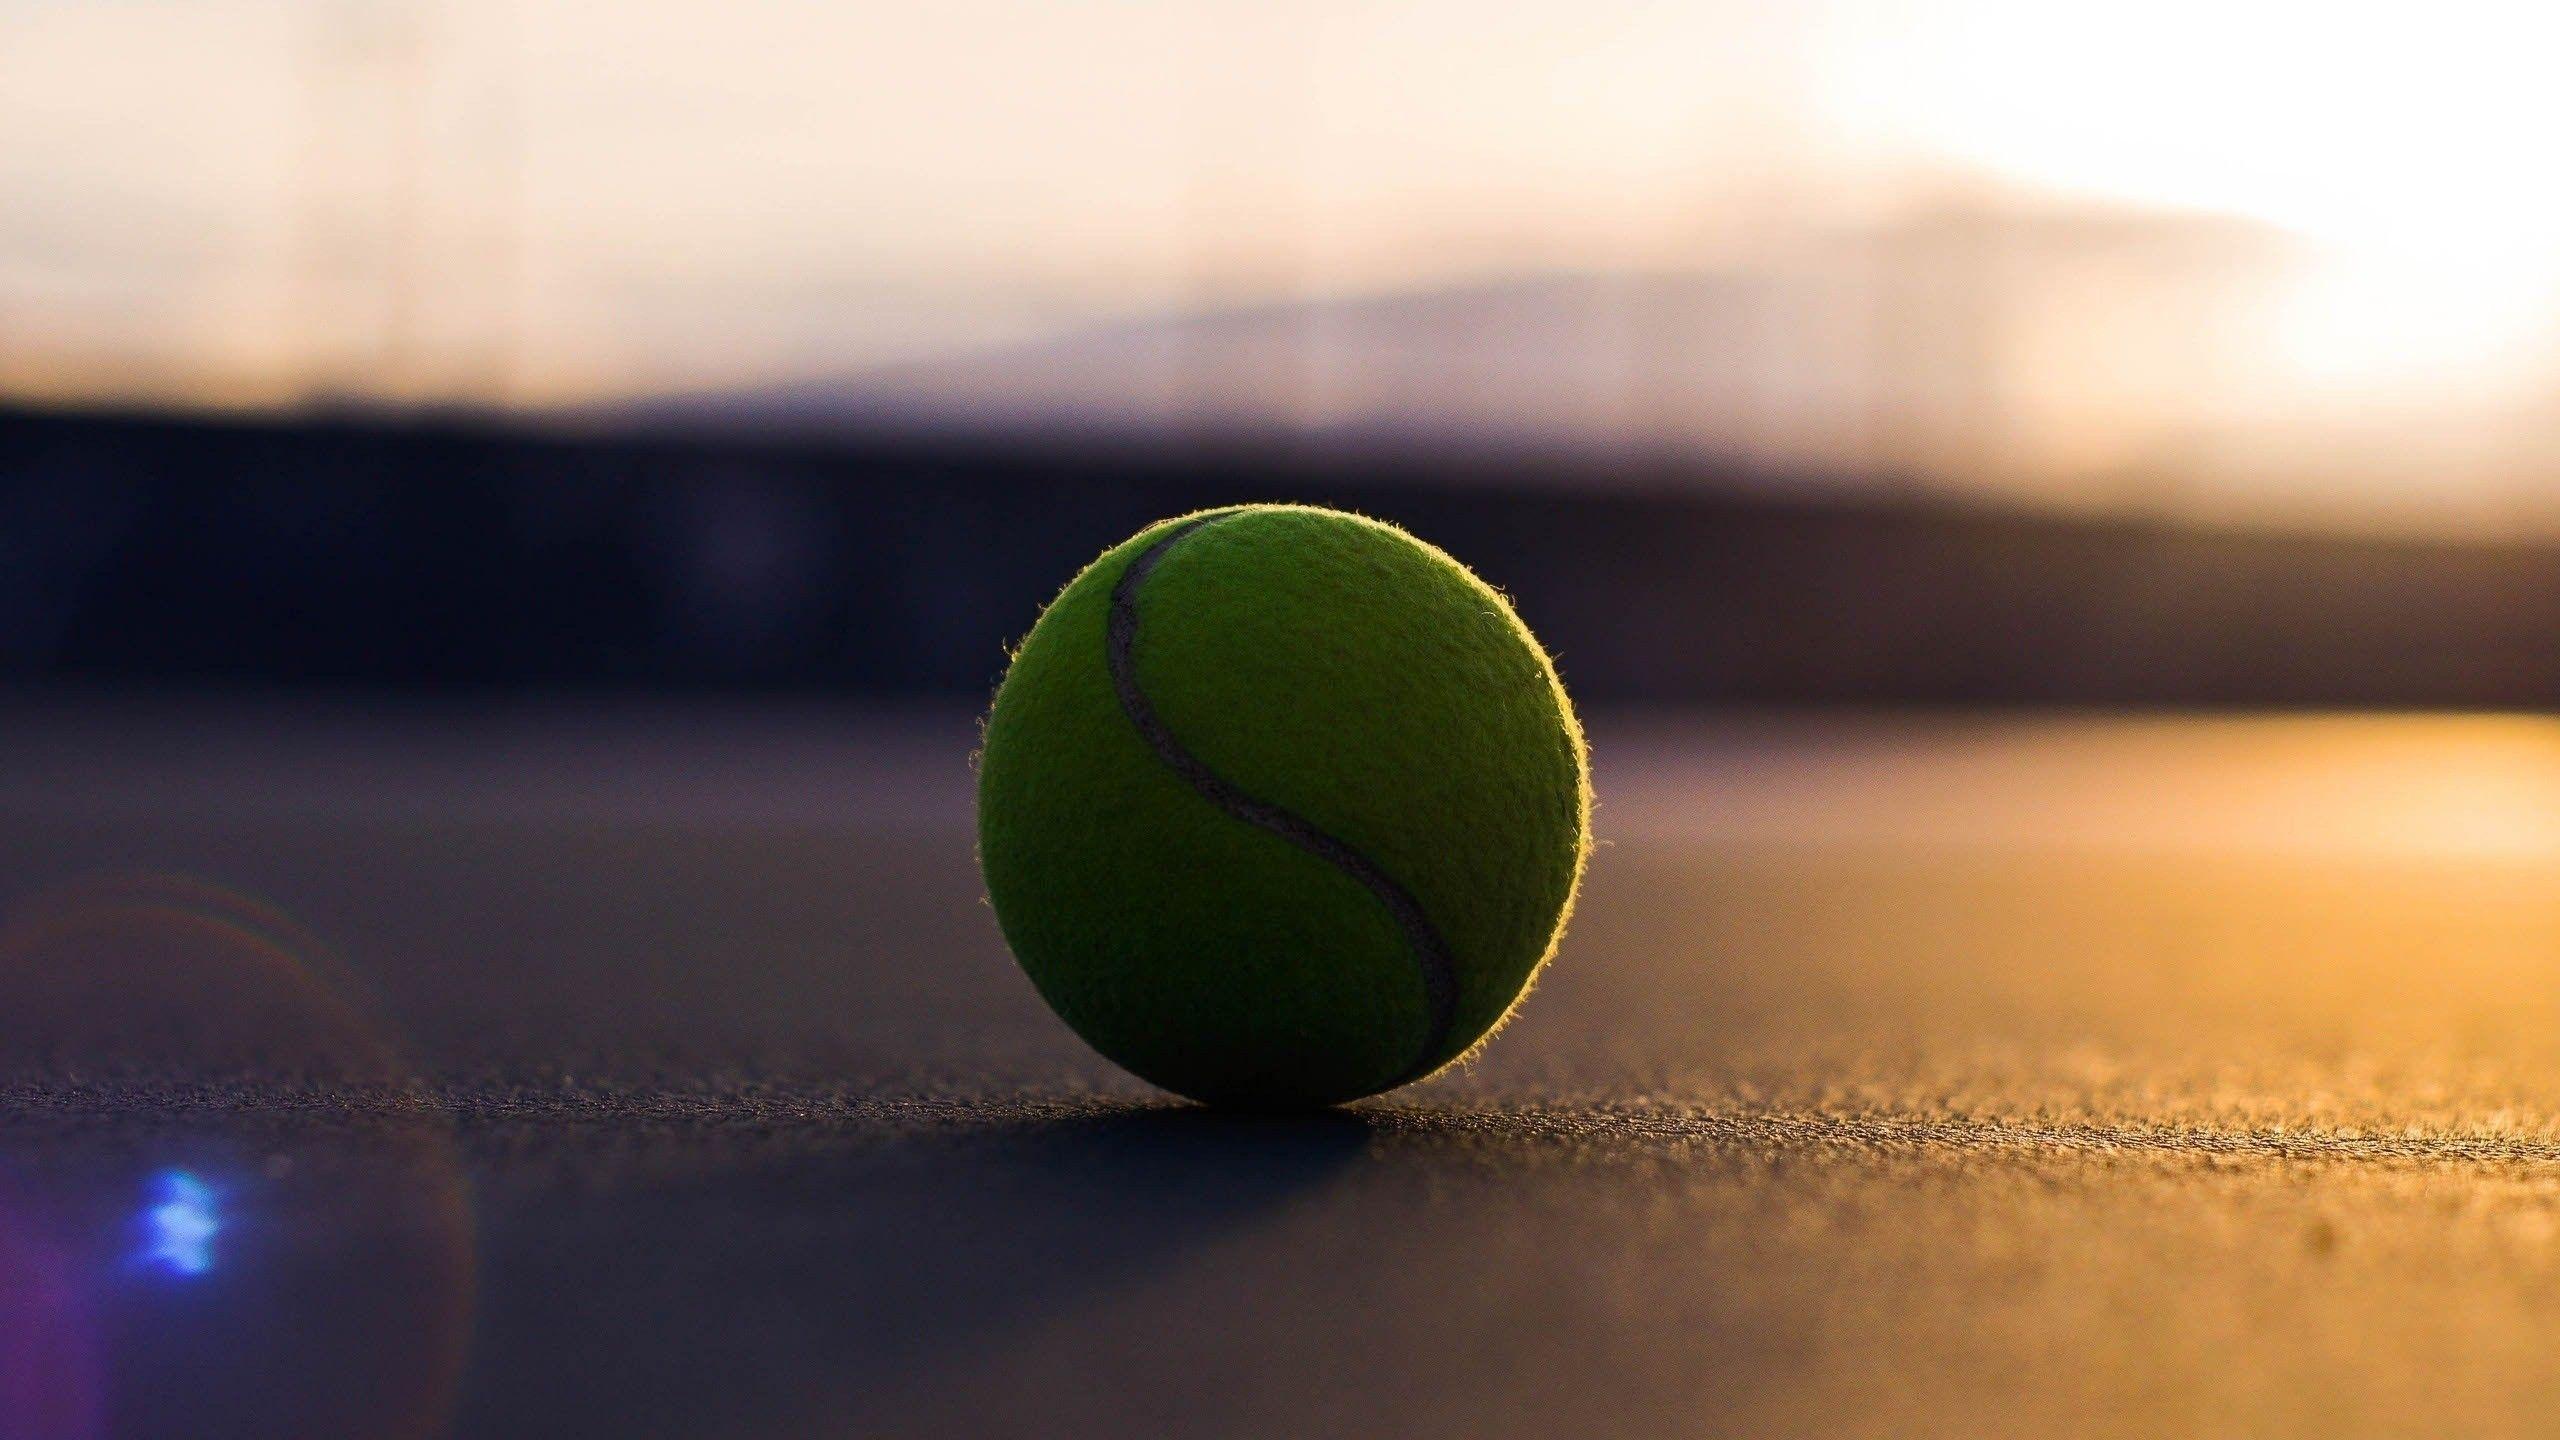 A tennis ball on the court - Tennis